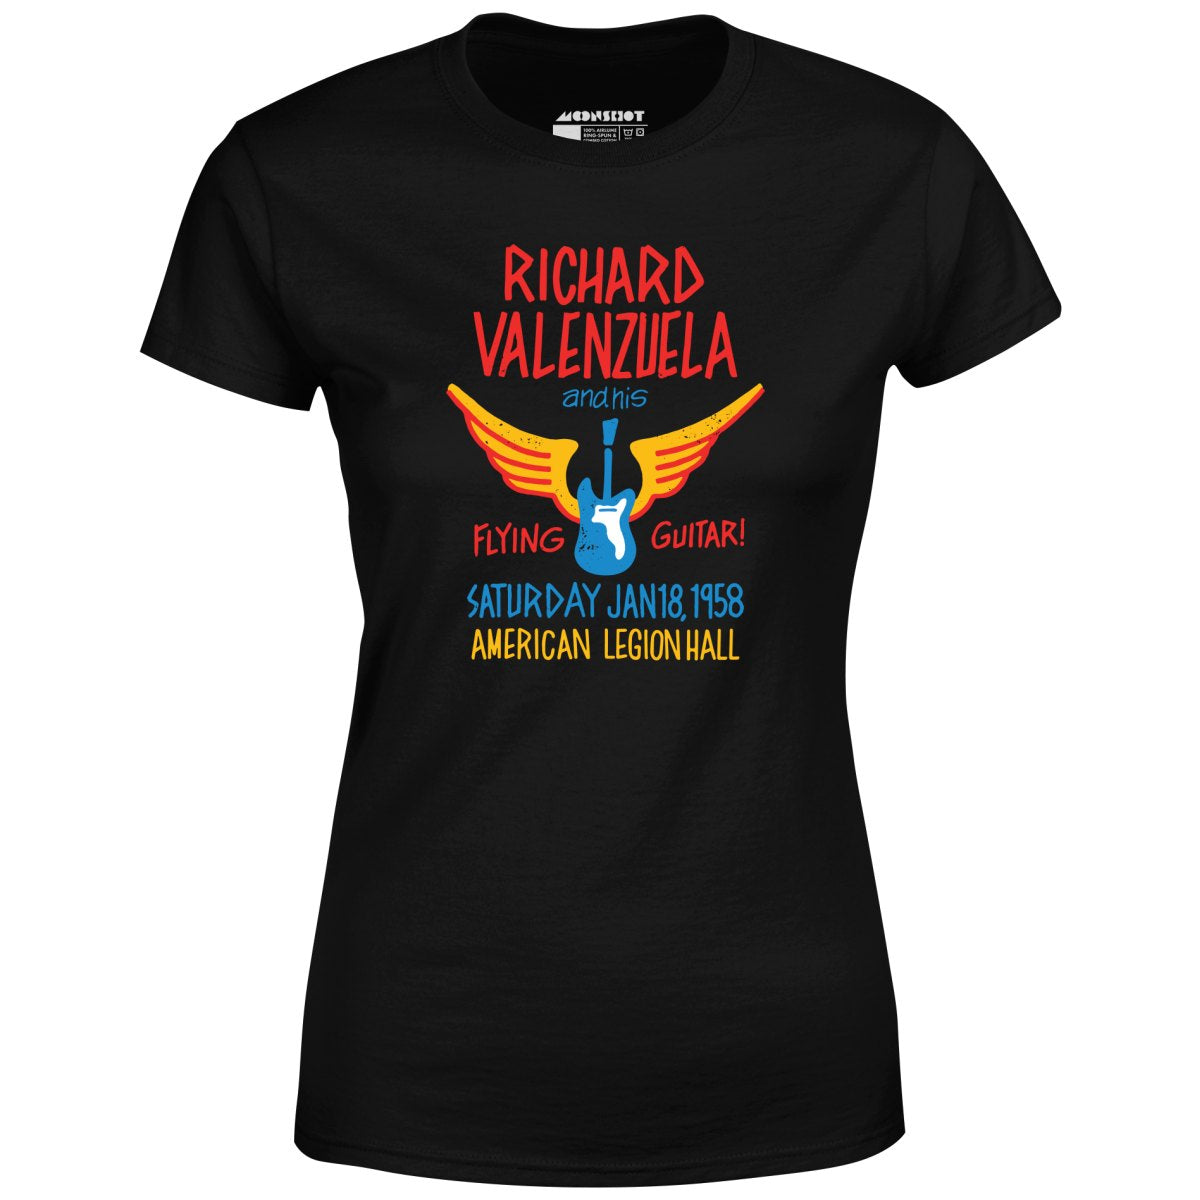 Richard Valenzuela and His Flying Guitar - Women's T-Shirt